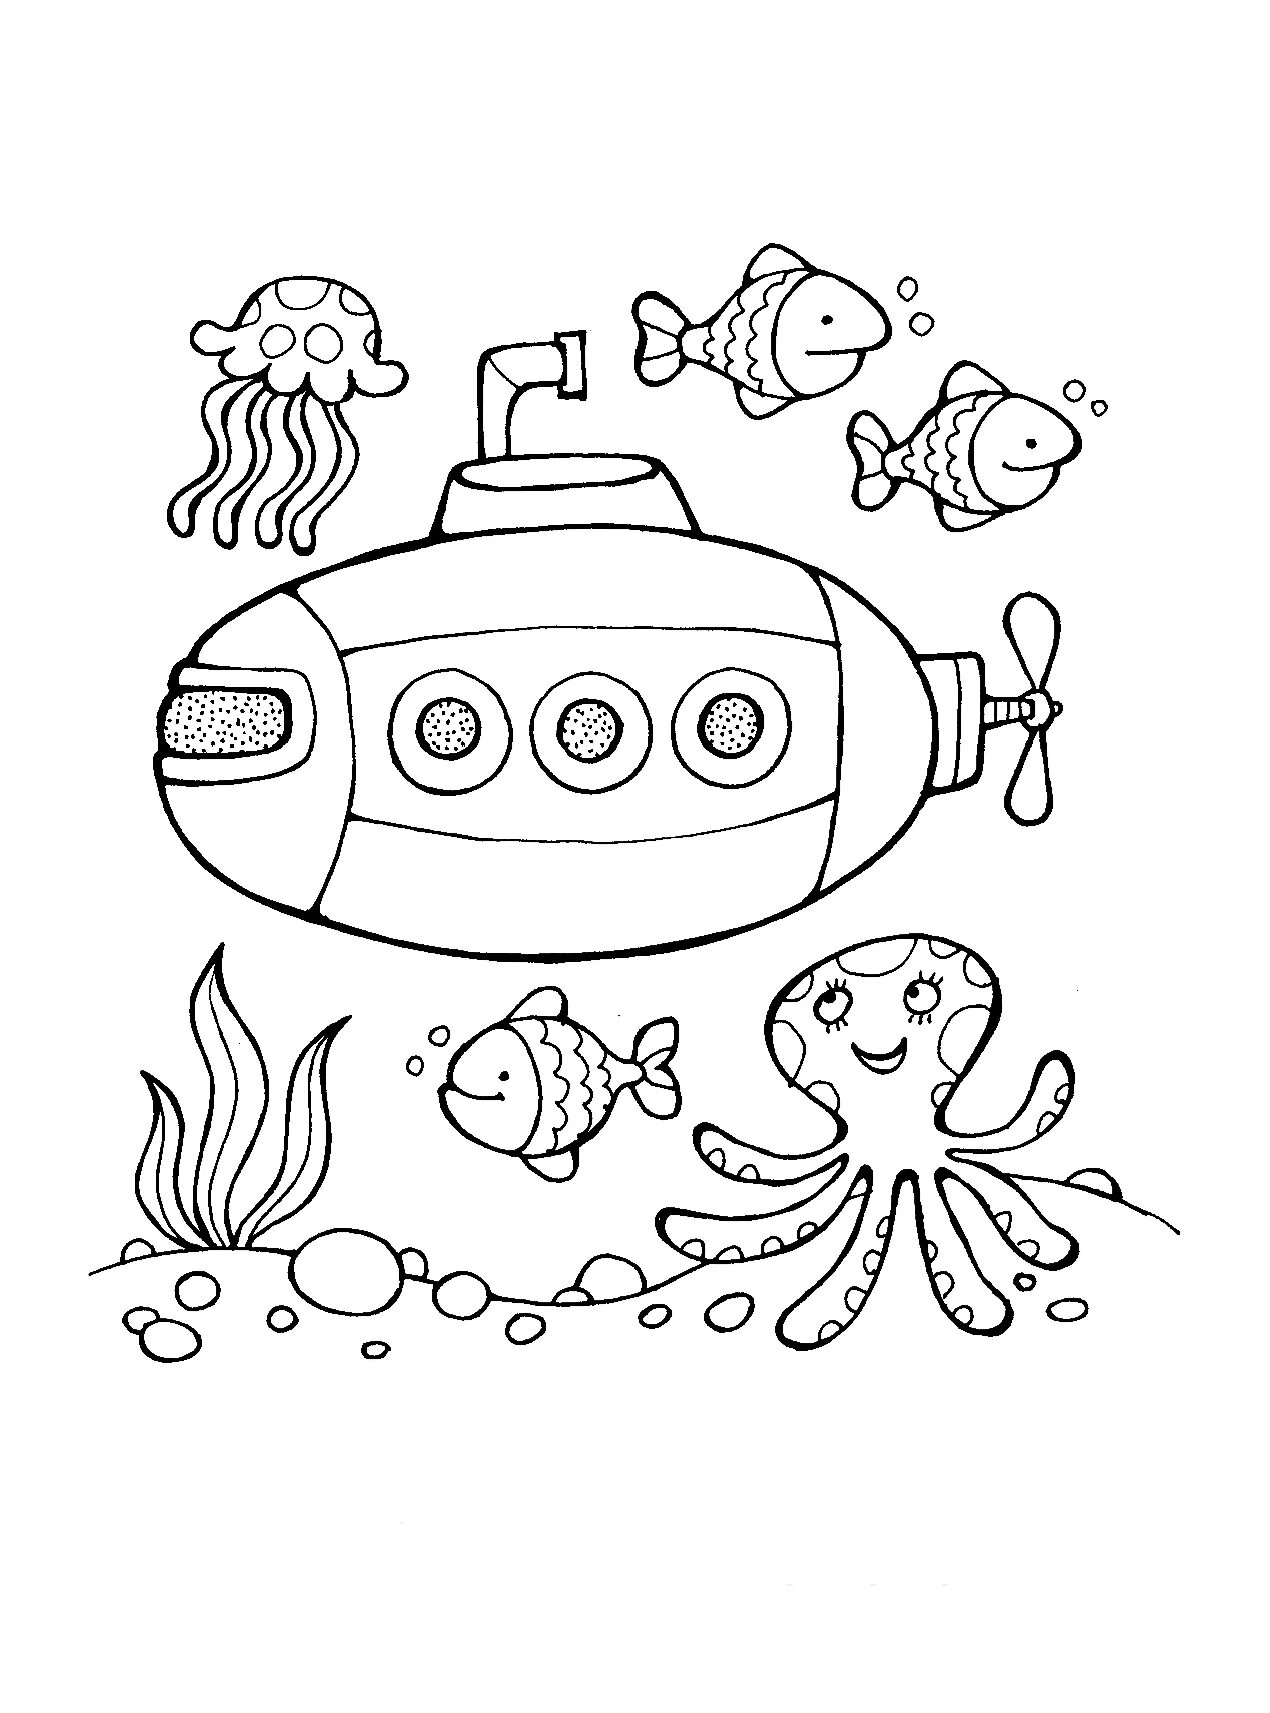 Submarine for children 5 6 years old #3